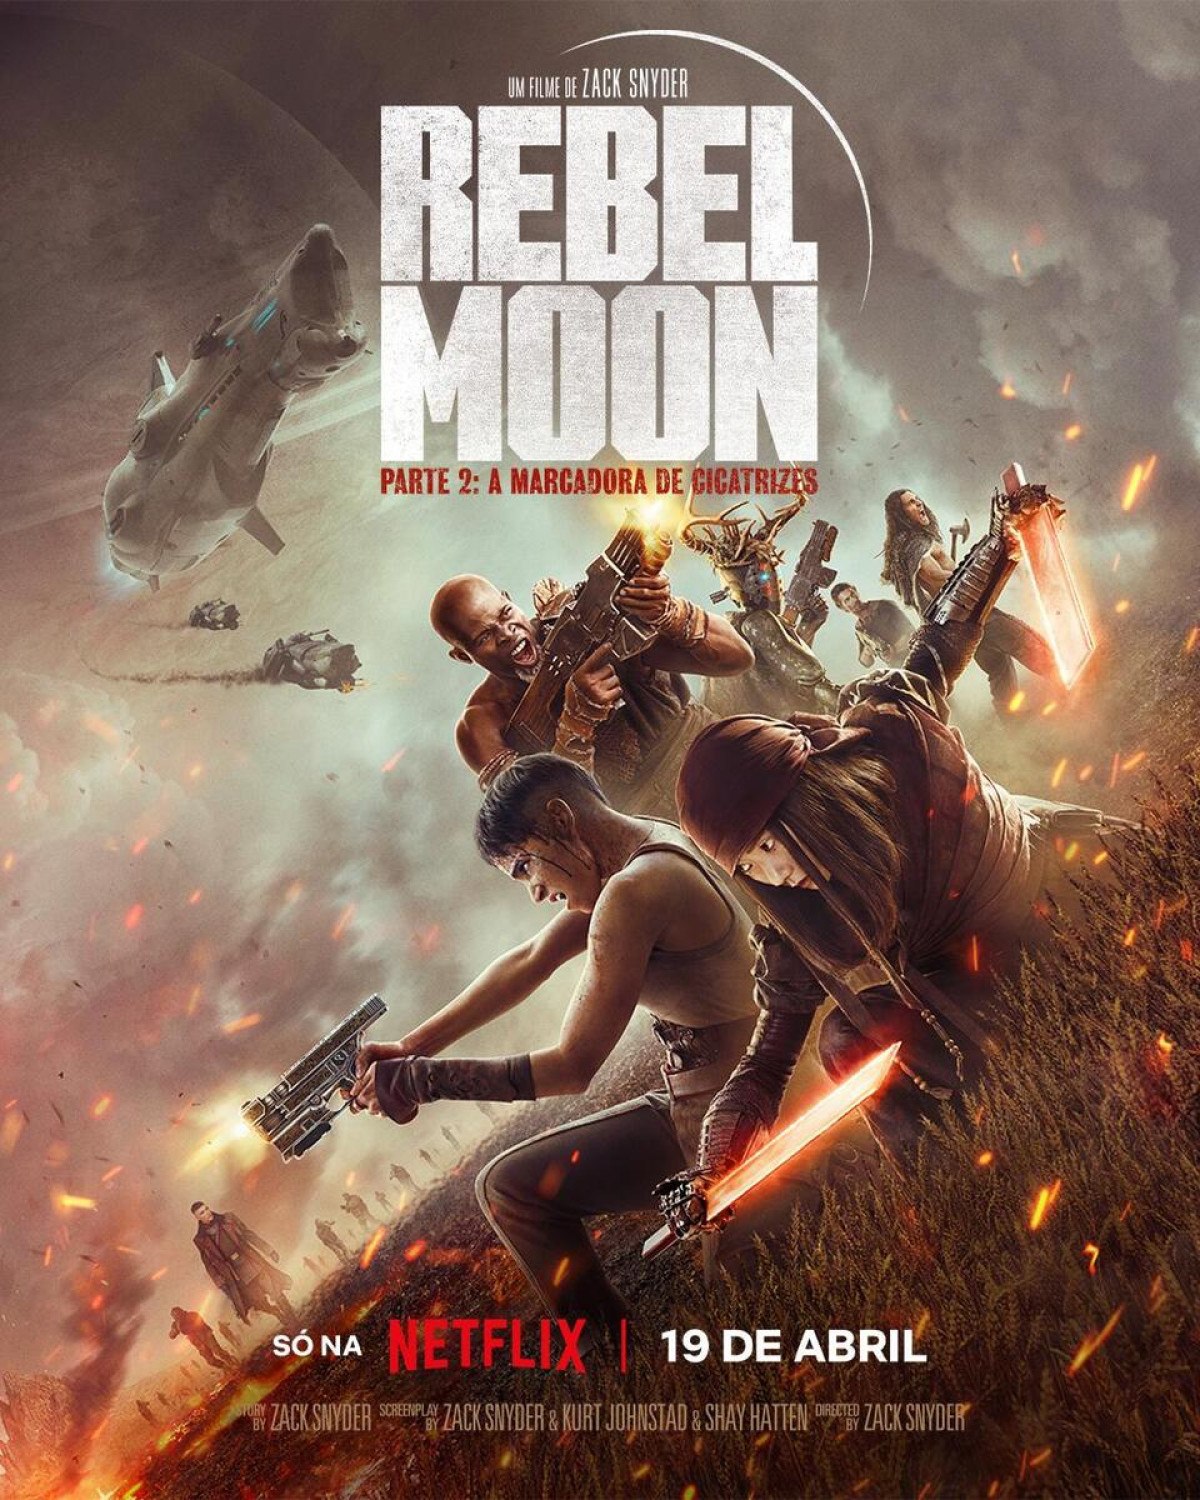 trailer | netflix apresenta parte 2 de “rebel moon”